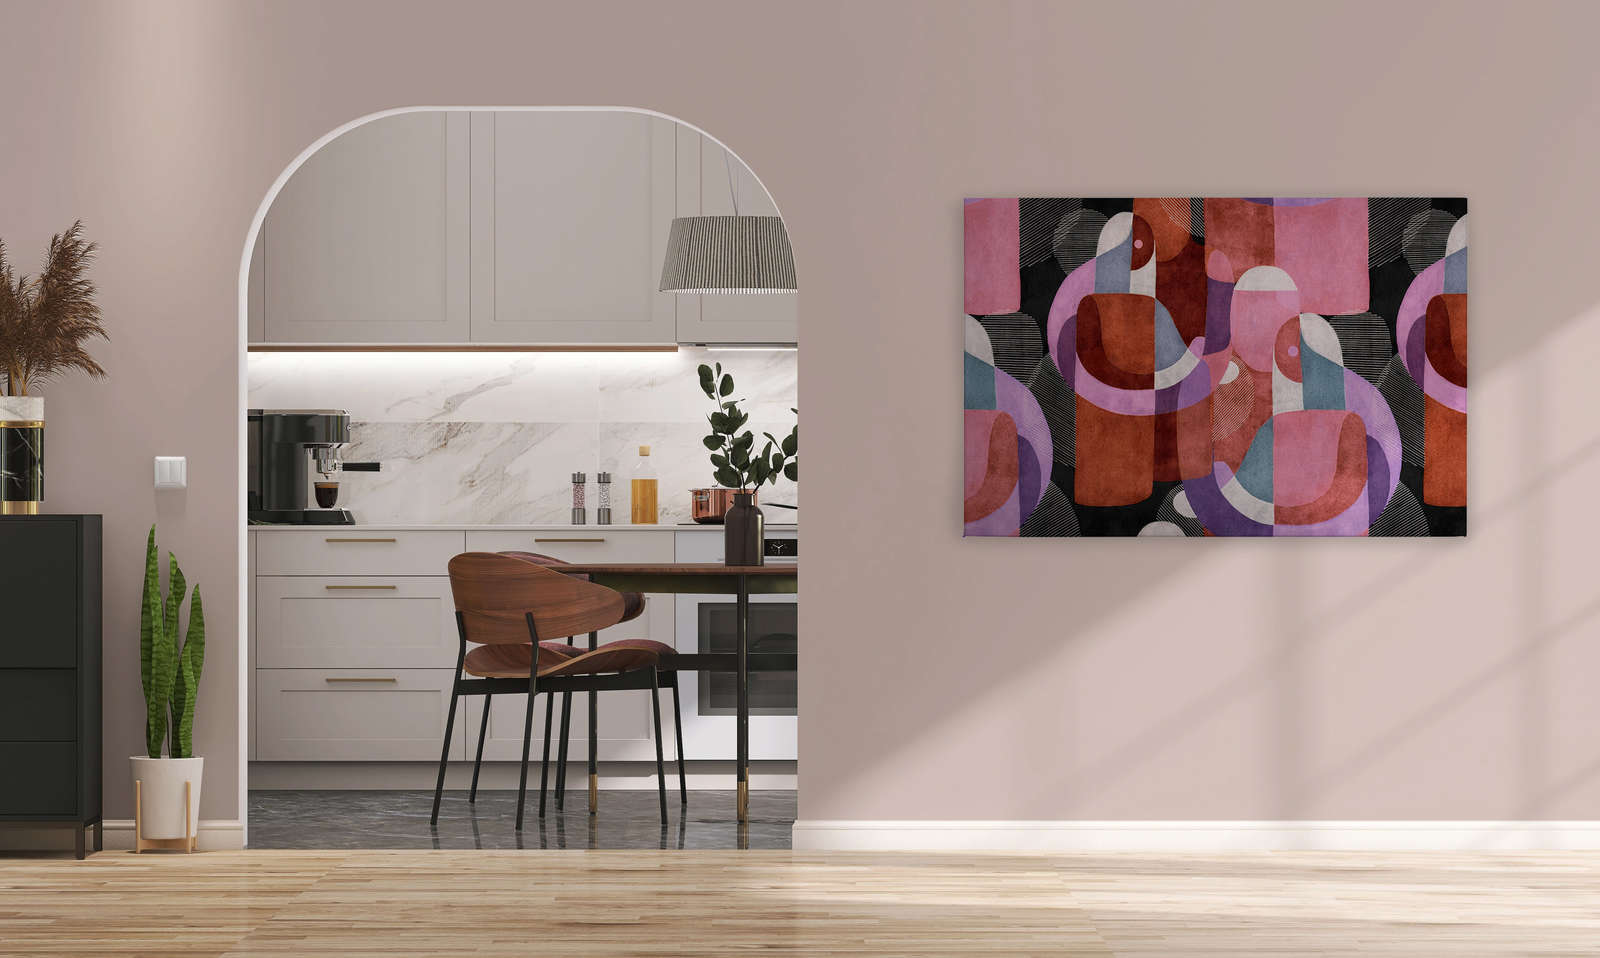             Meeting Place 2 - Leinwandbild abstraktes Ethno Design in Schwarz & Rosa – 1,20 m x 0,80 m
        